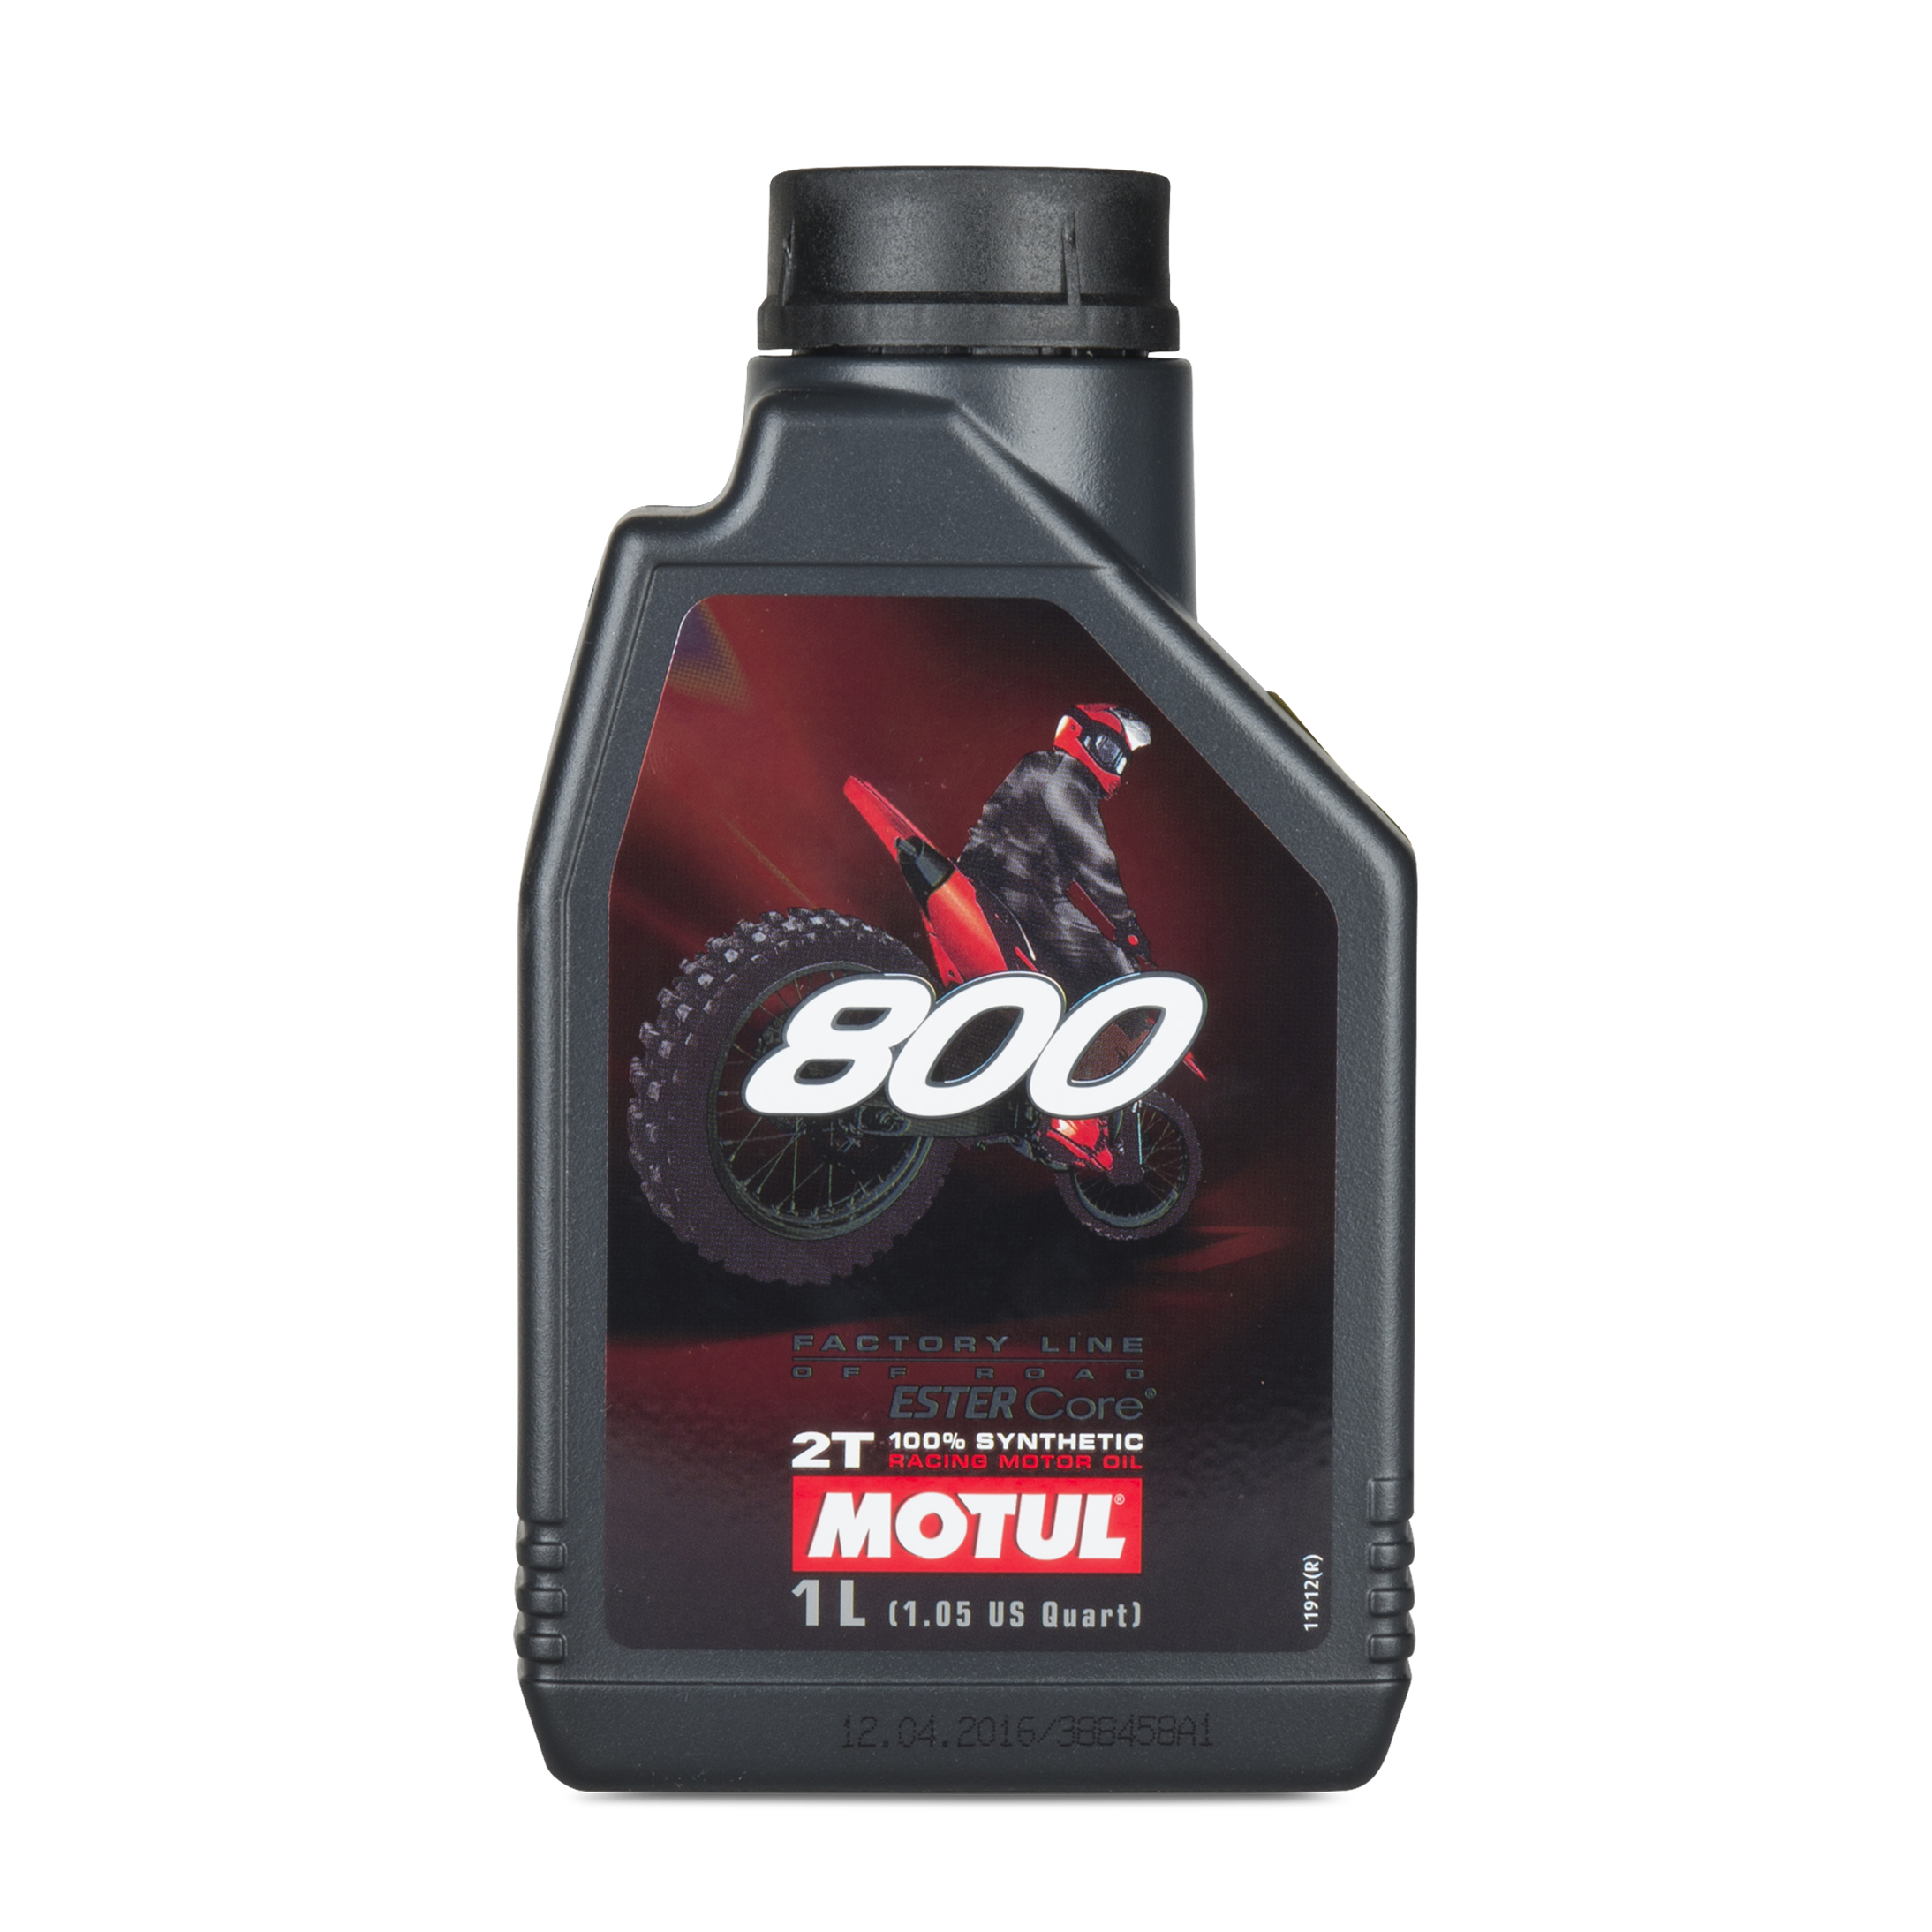 Motul 800 Offroad 2T 1L Oil Fully synthetic - Now 20% Savings